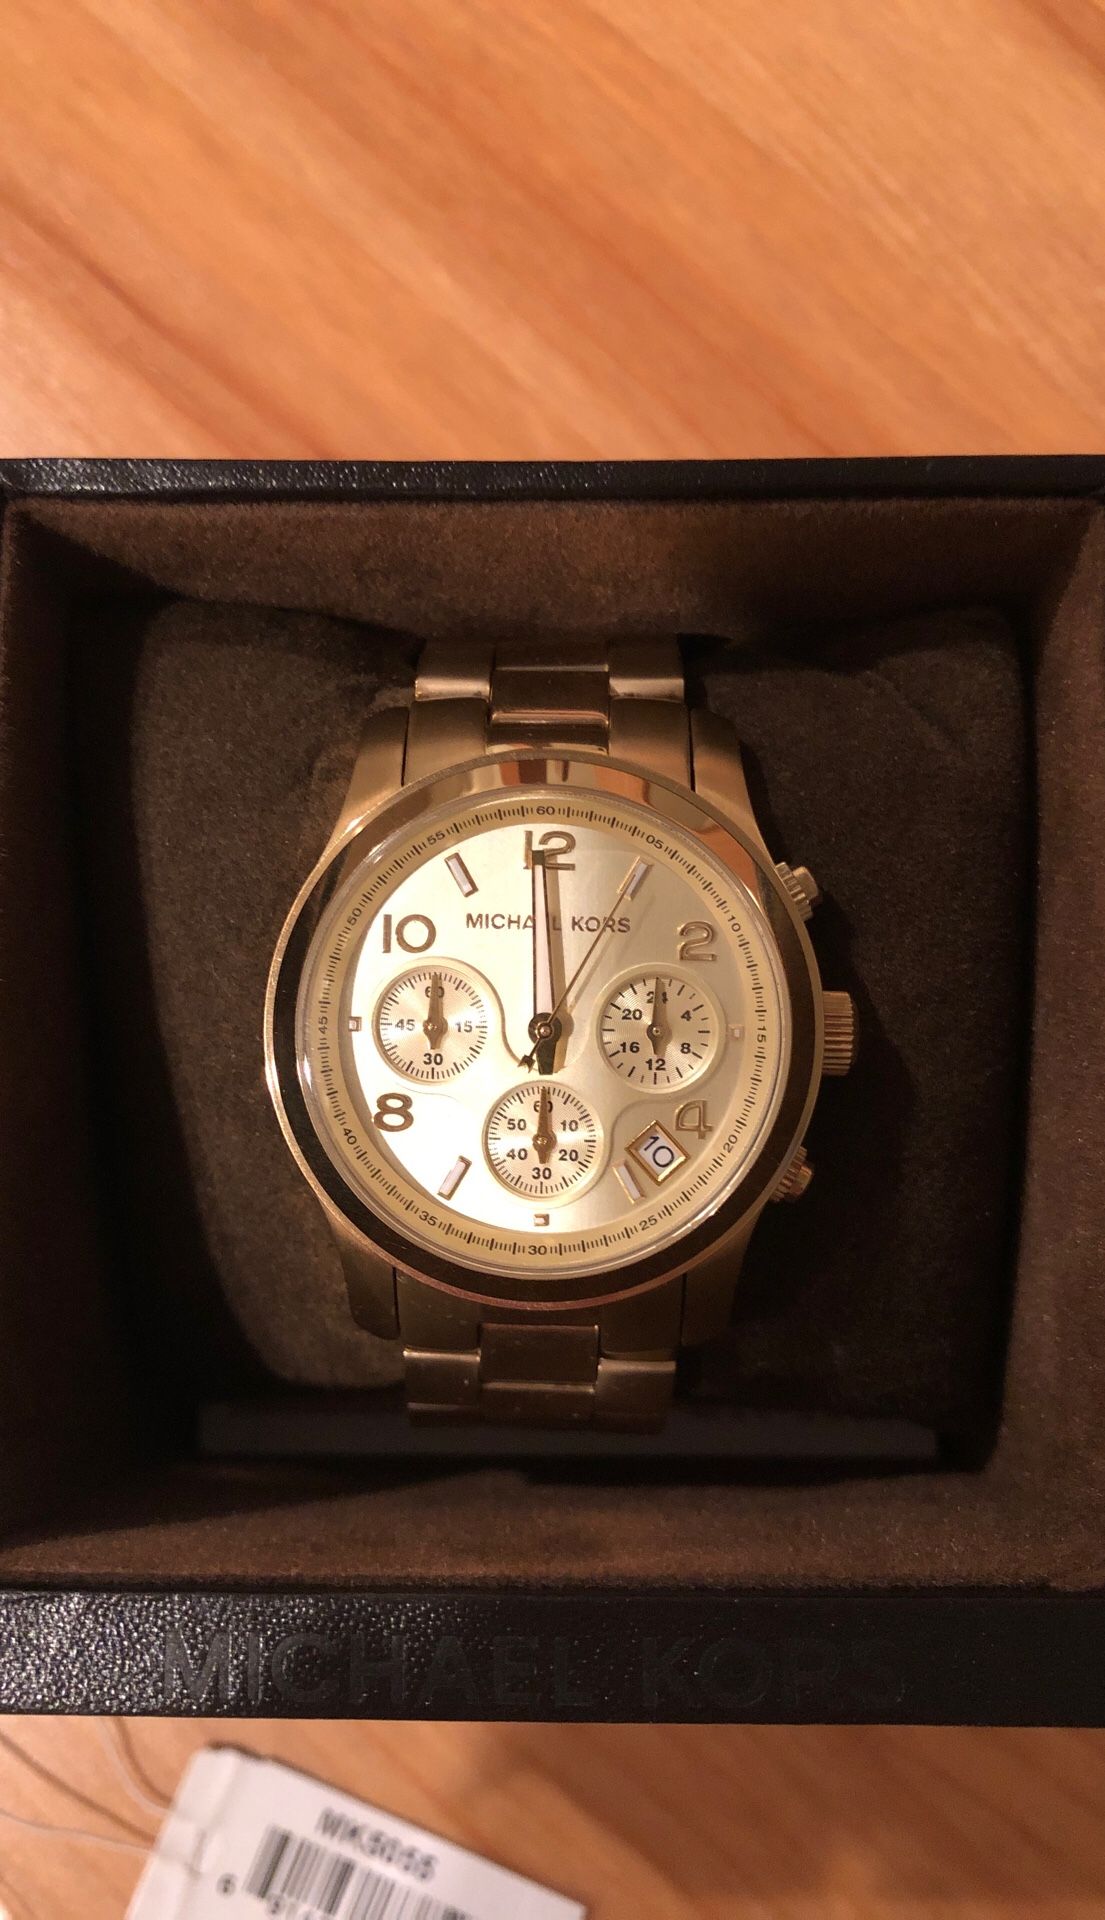 Michael Kors Gold Watch - Chronograph Style - Like New